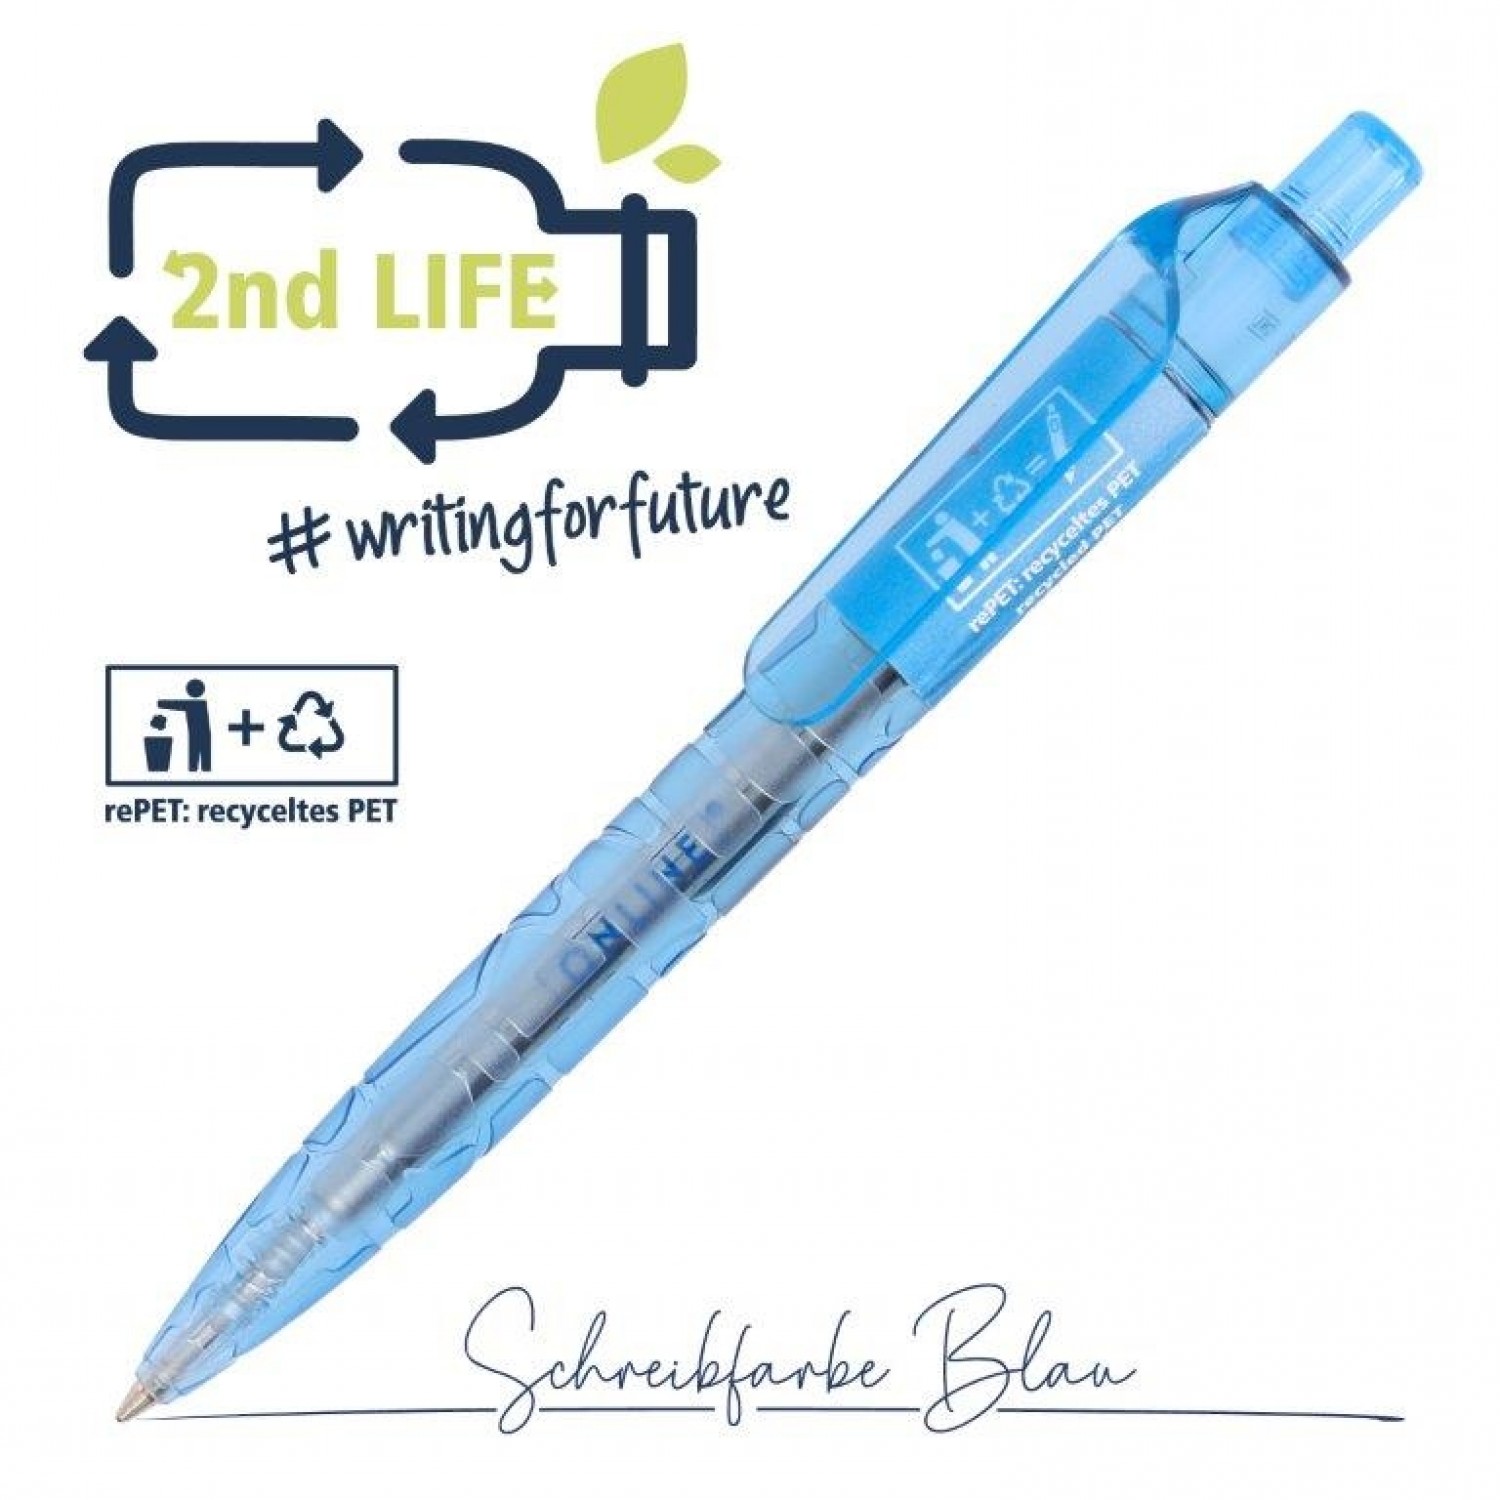 Ballpen 2nd LIFE from recycled PET | Online Pen